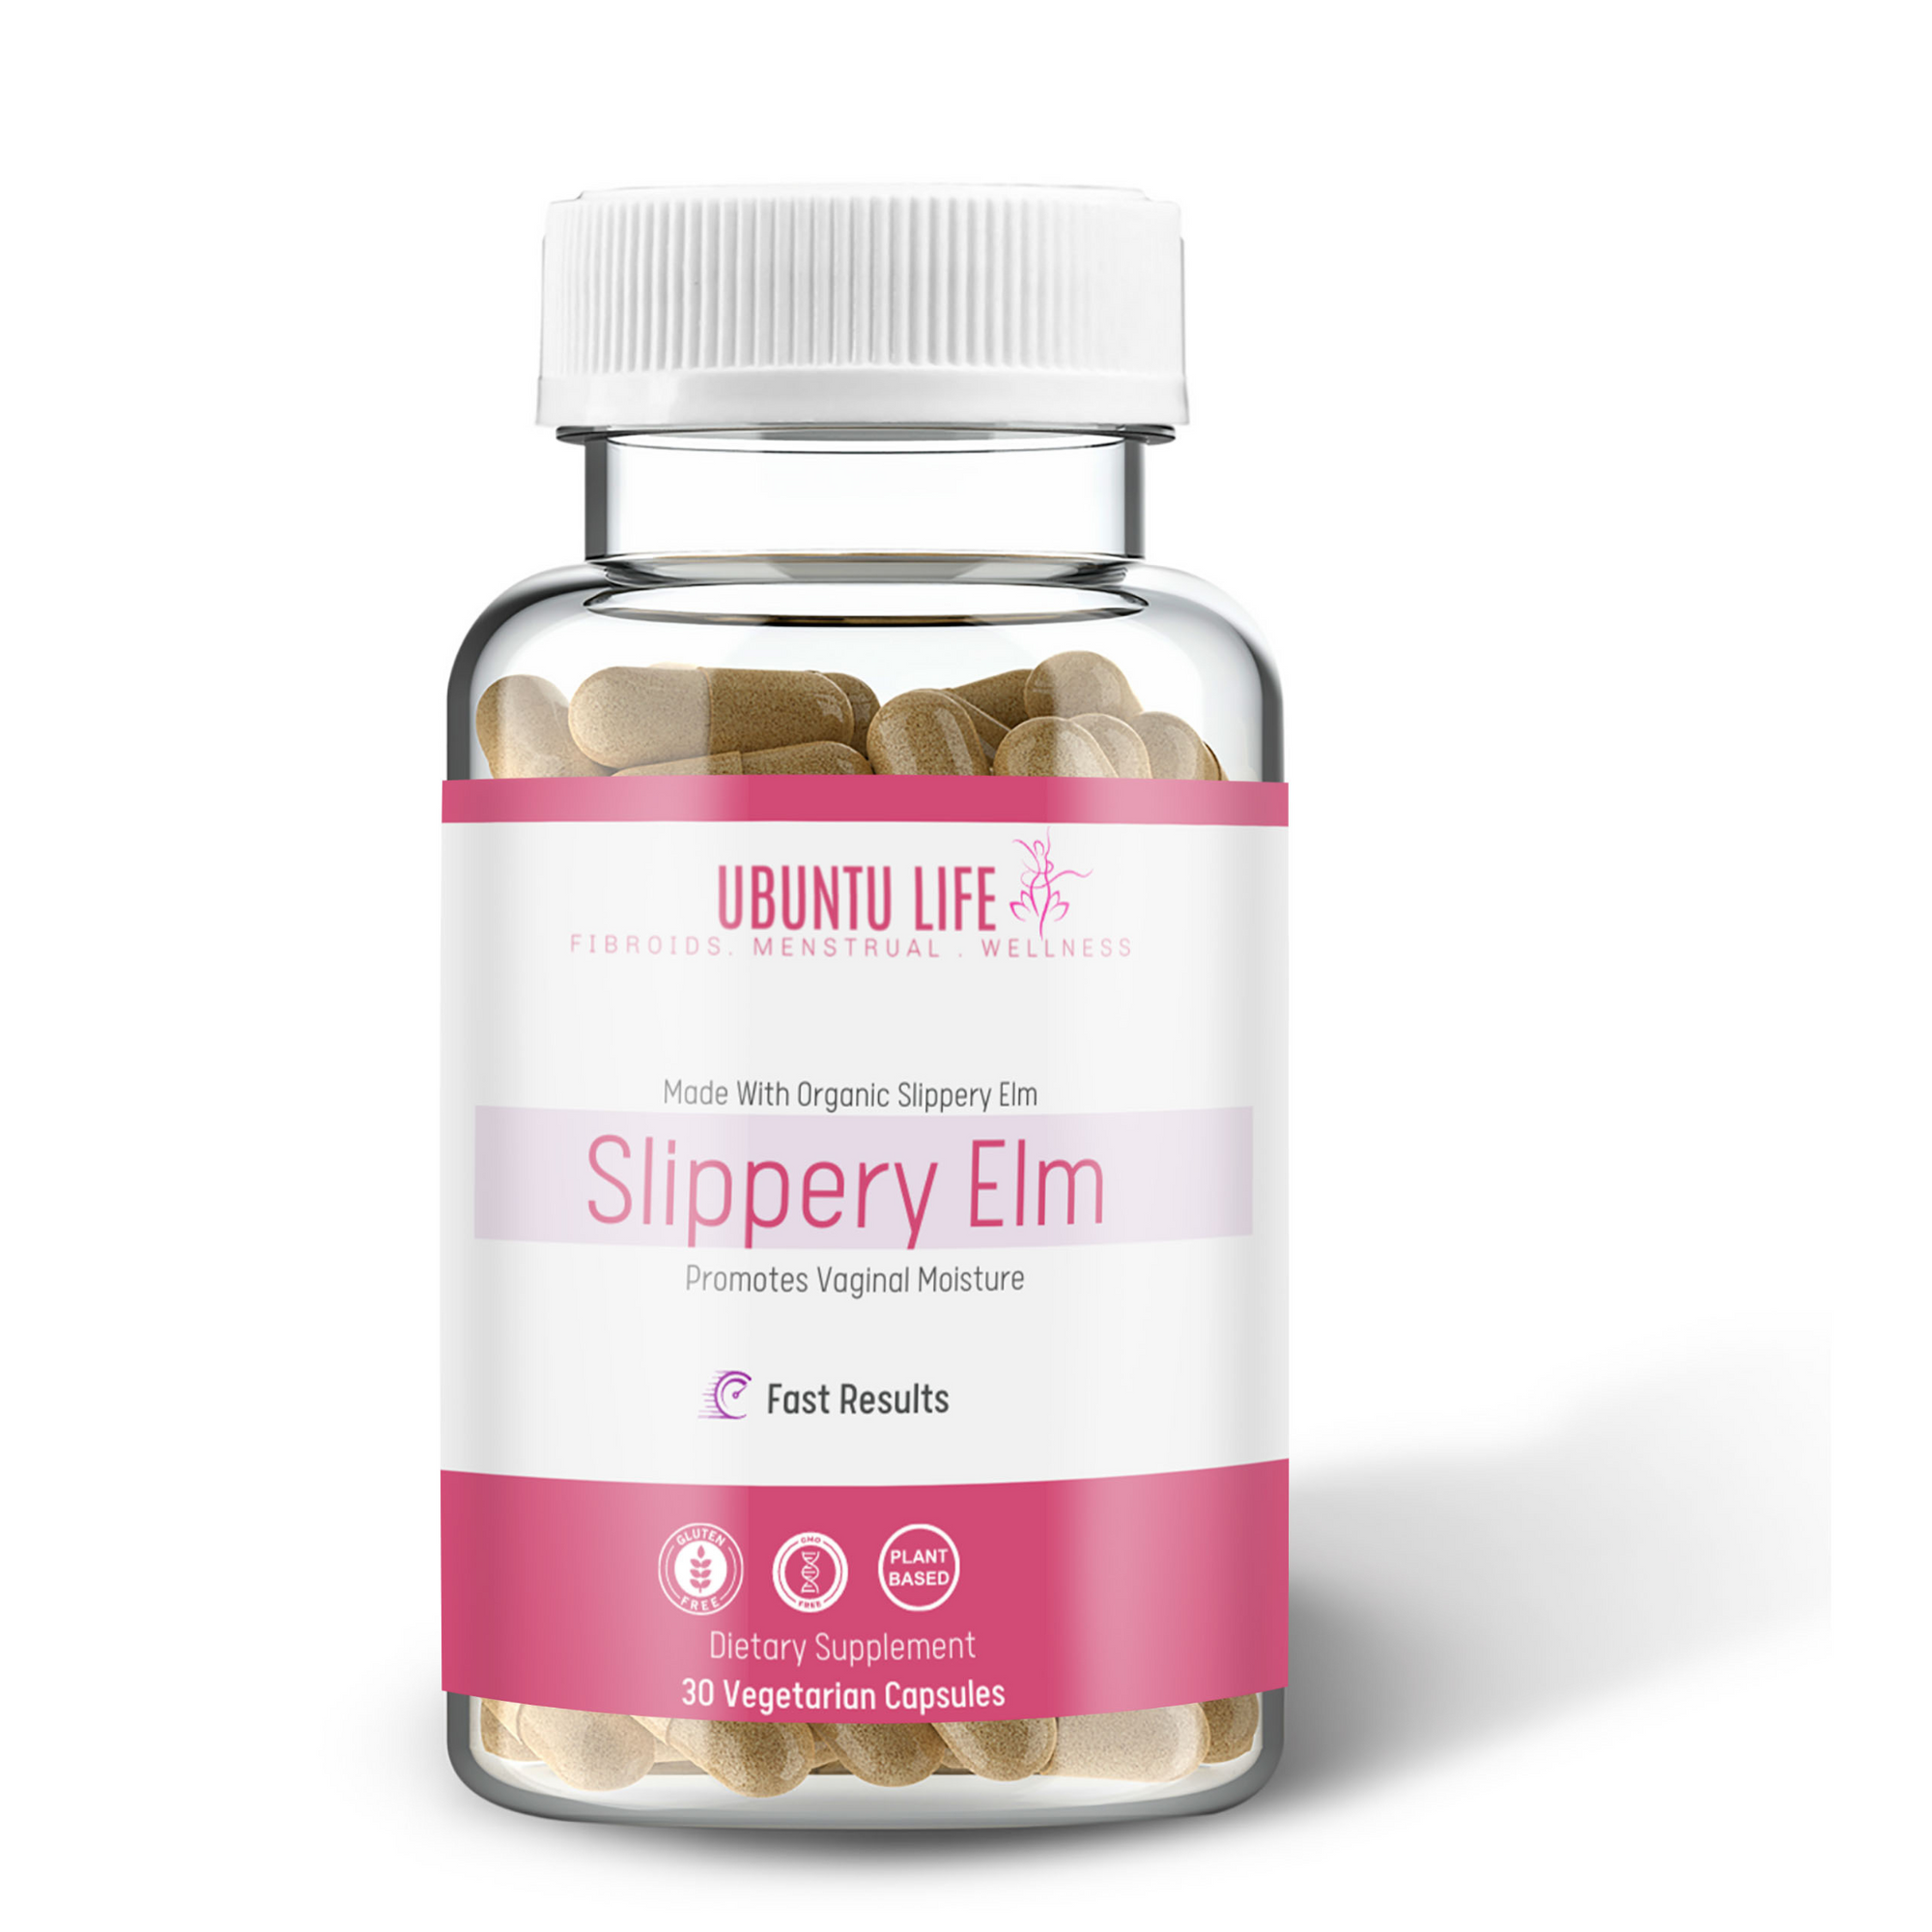 Slippery Elm [For Vaginal Dryness + Prebiotic]